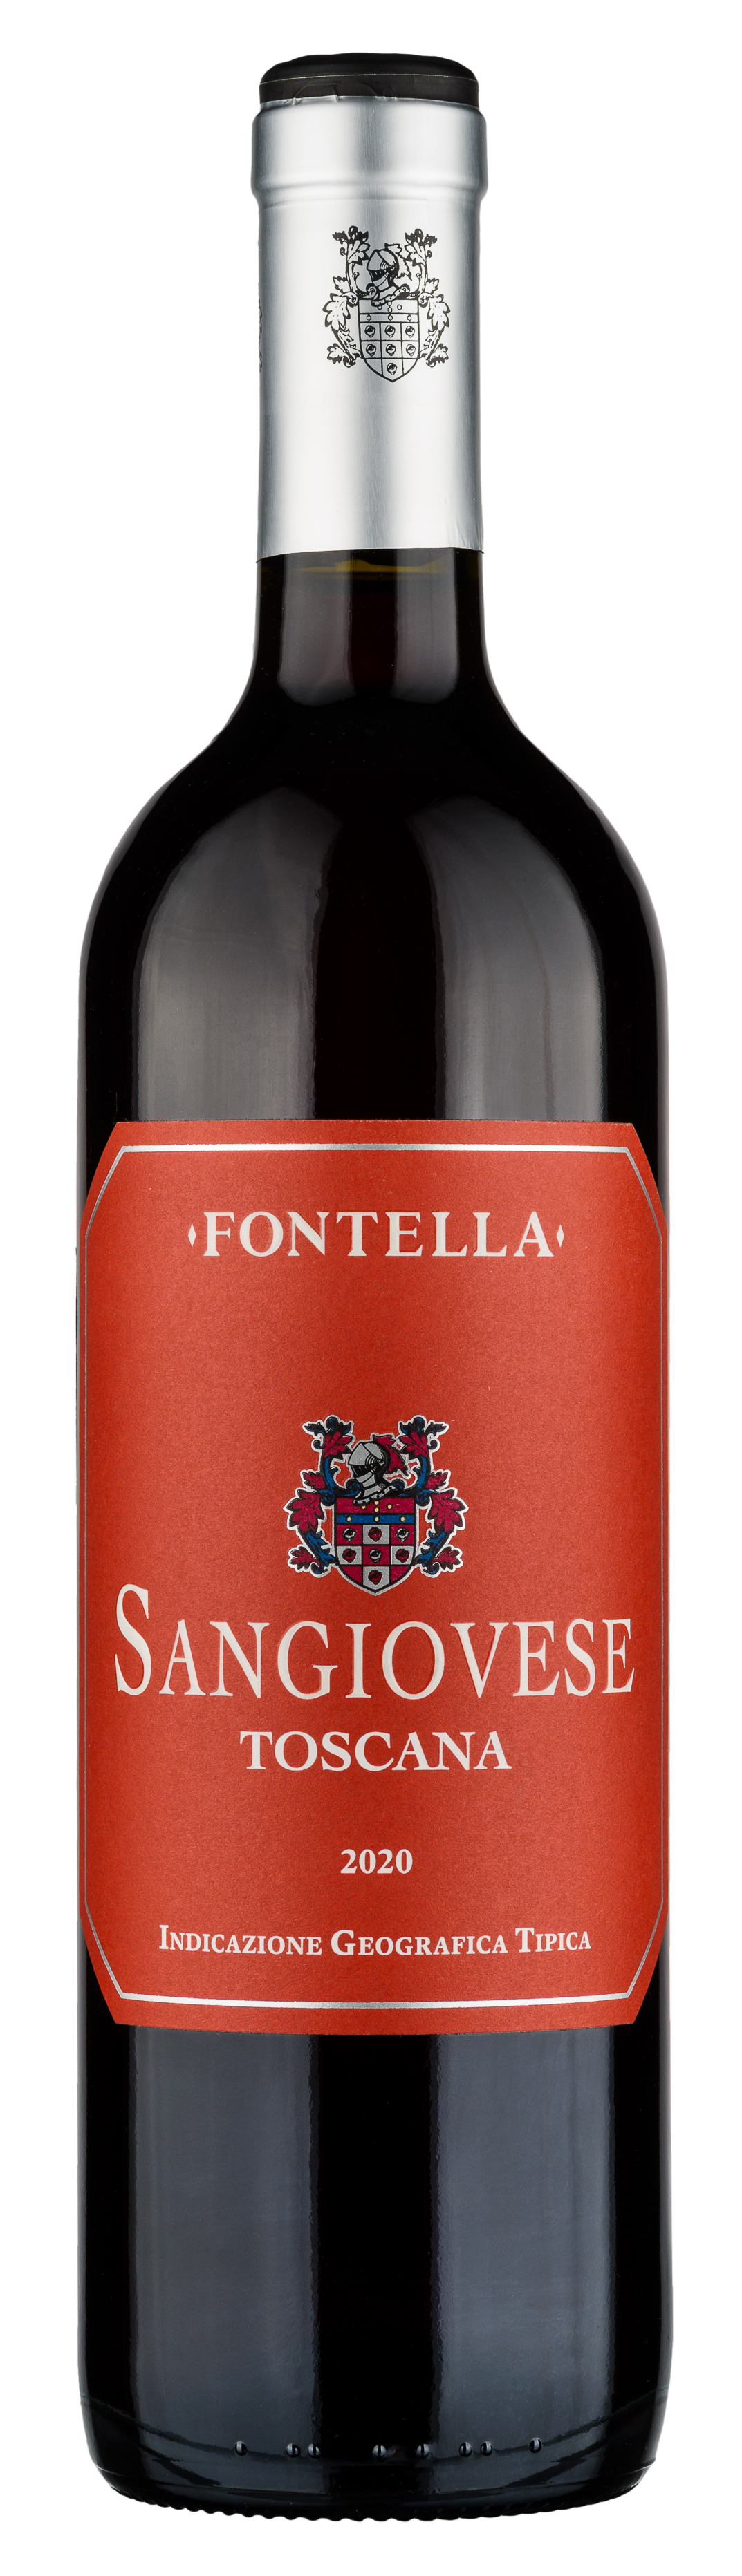 Wine Fontella Sangiovese Toscana